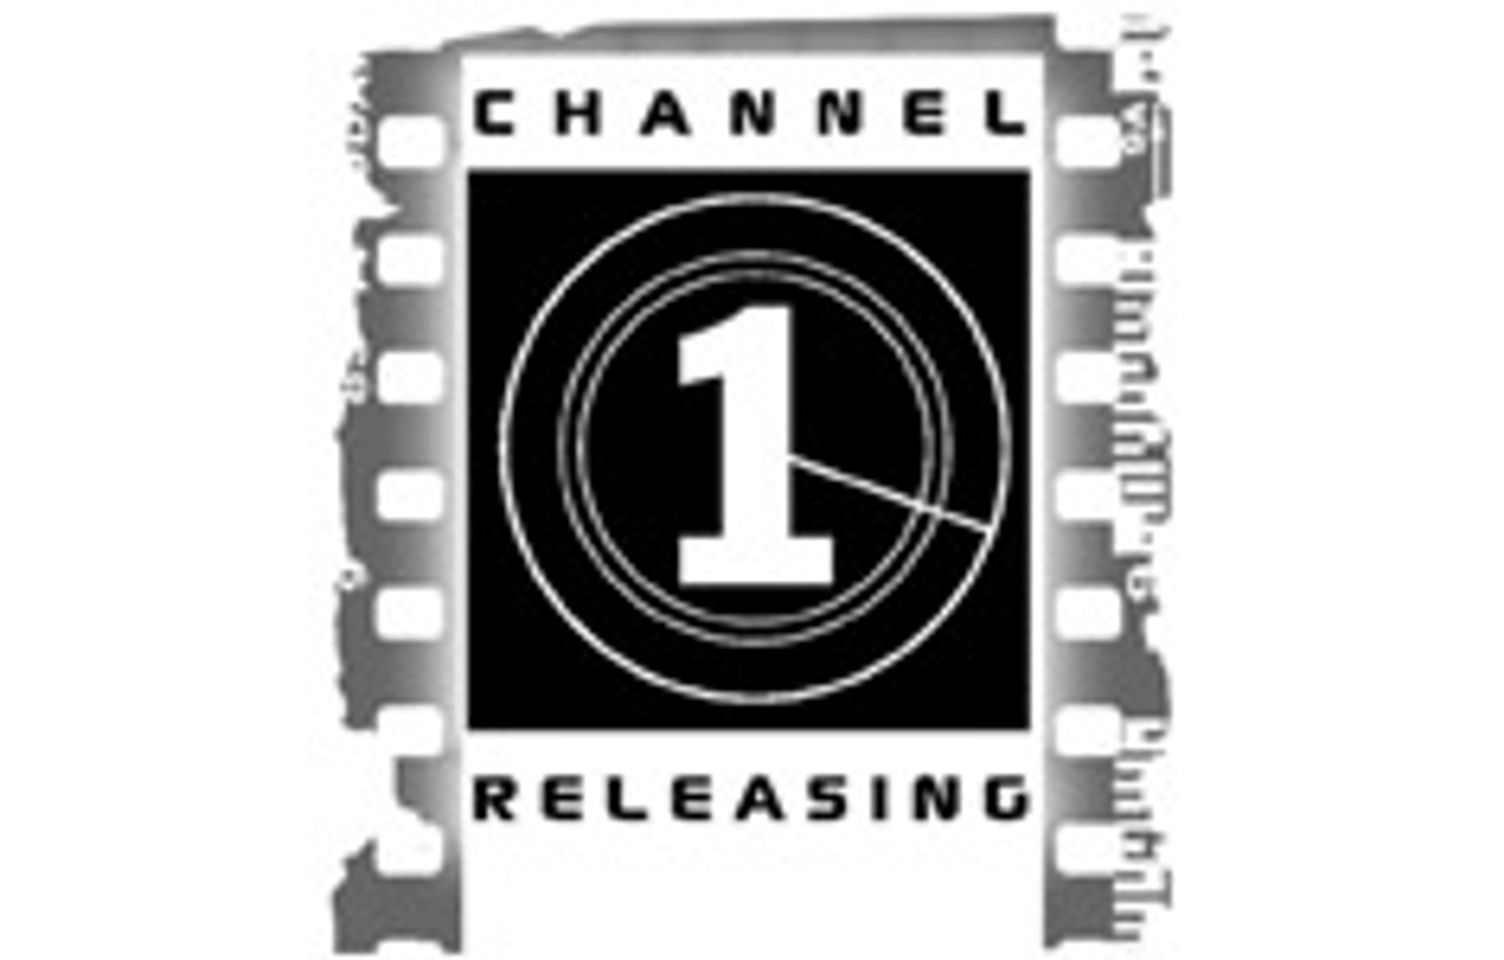 Company Profile: Channel 1 Releasing